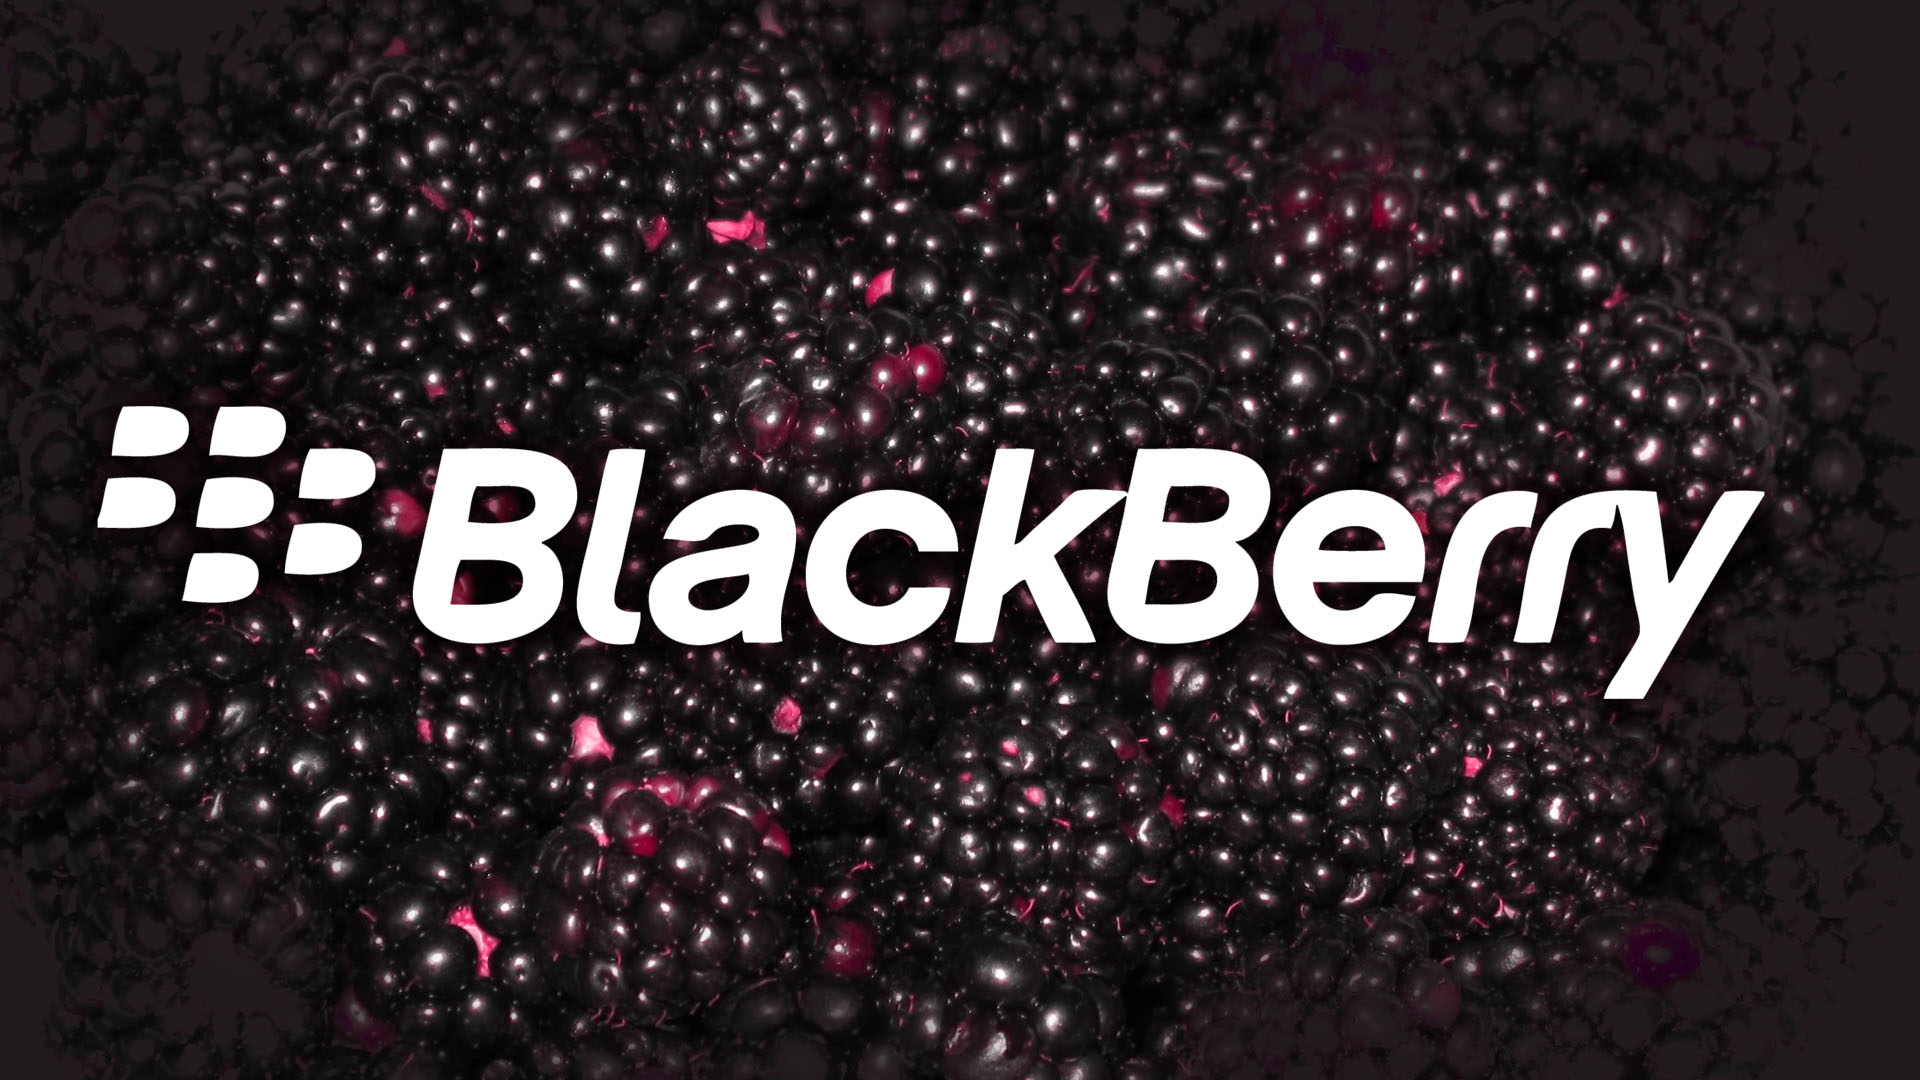 Blackberry Logo Wallpapers Download Free Desktop Wallpaper Images